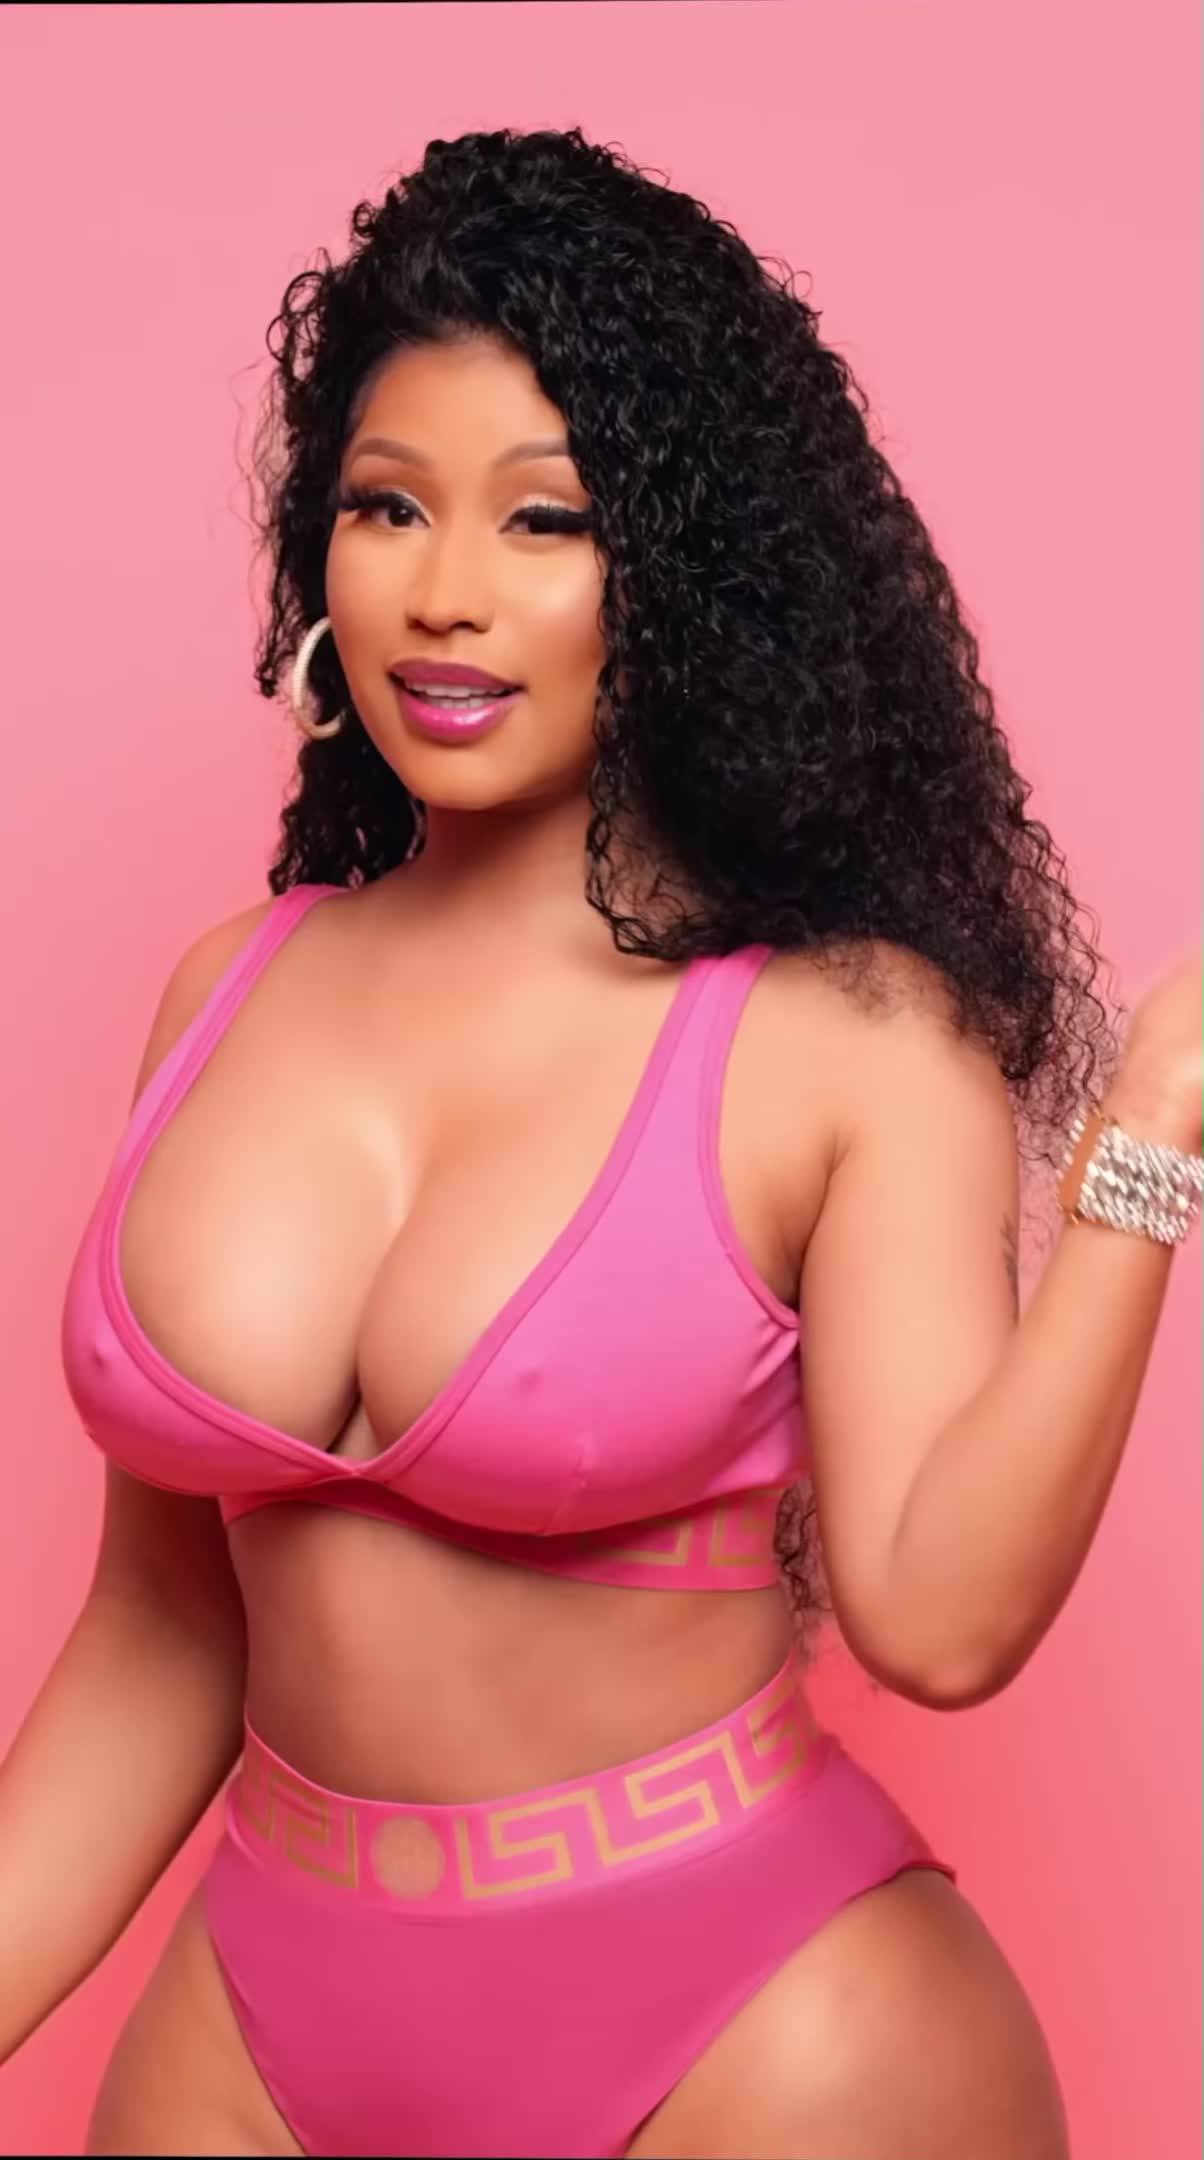 Nicki minaj huge boobs